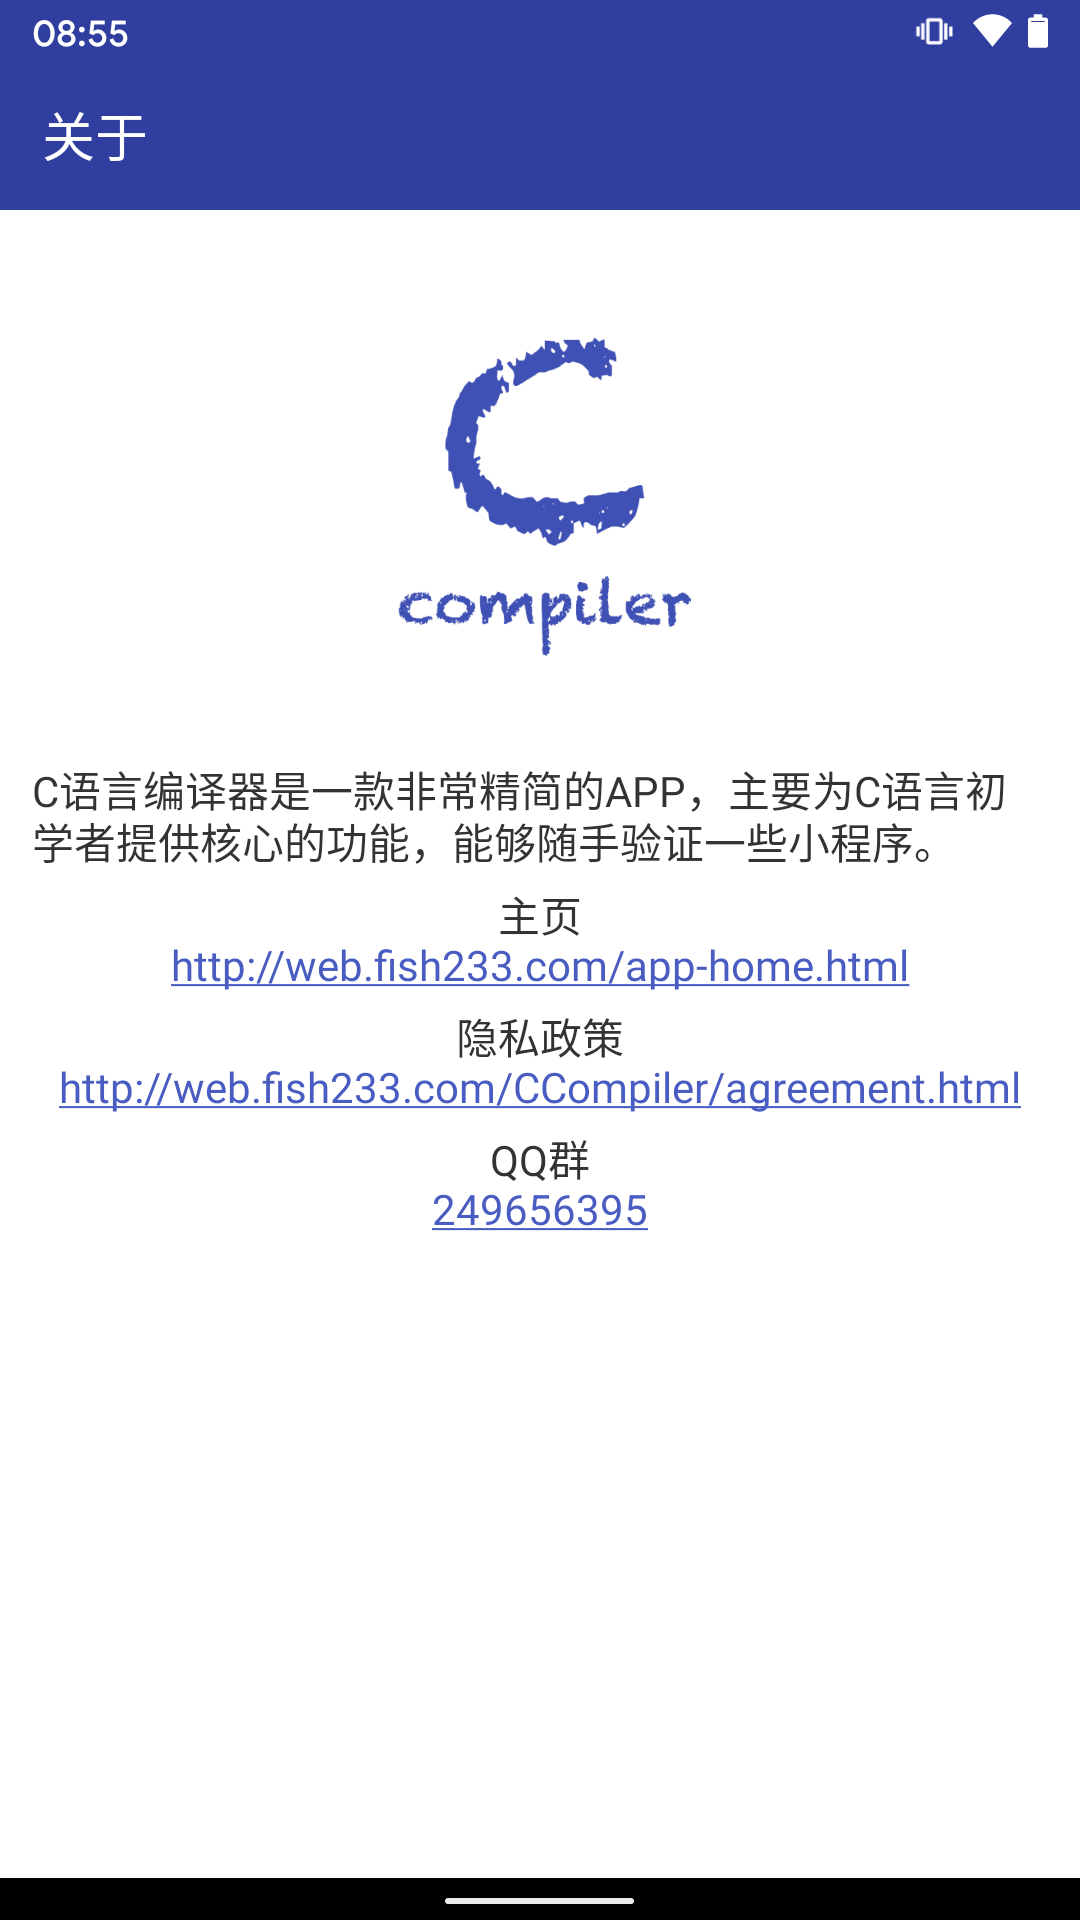 C语言编译器手机版app下载,C语言编译器app下载安装手机版 v10.2.1